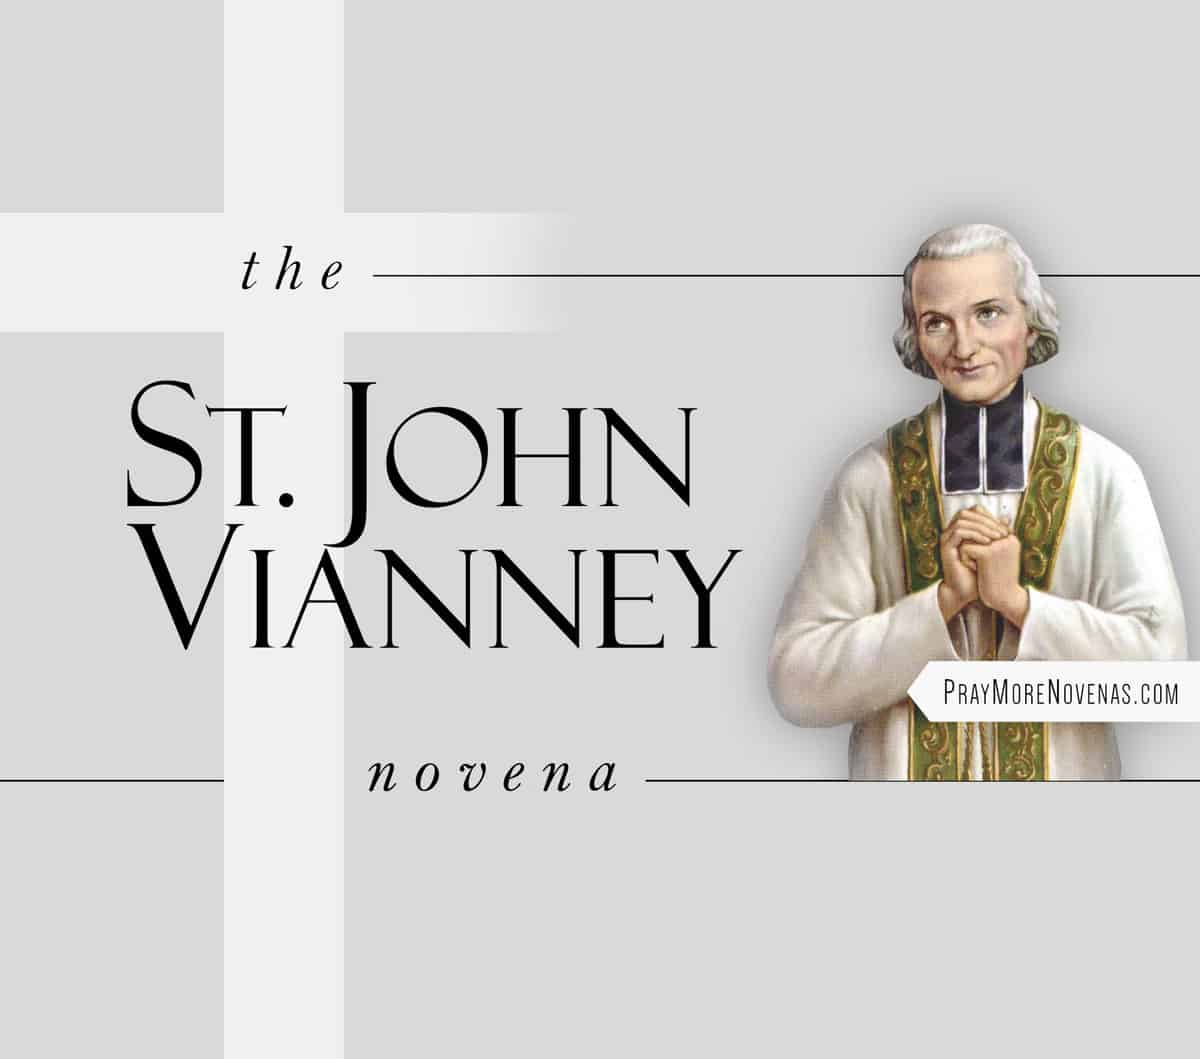 St. John Vianney Novena Pray More Novenas Novena Prayers & Catholic